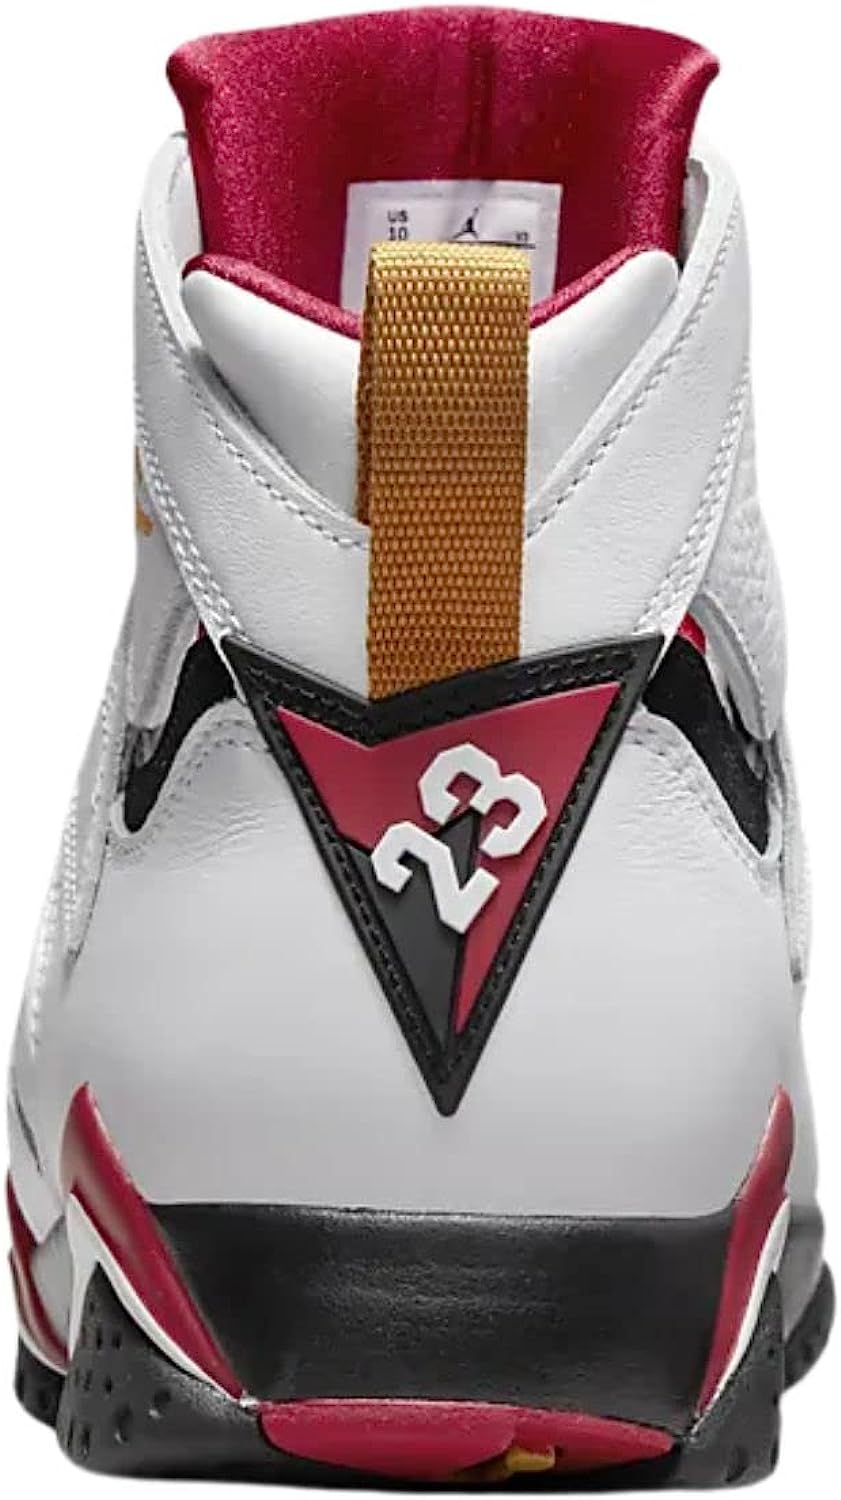 Jordan Mens Air 7 Retro Shoes